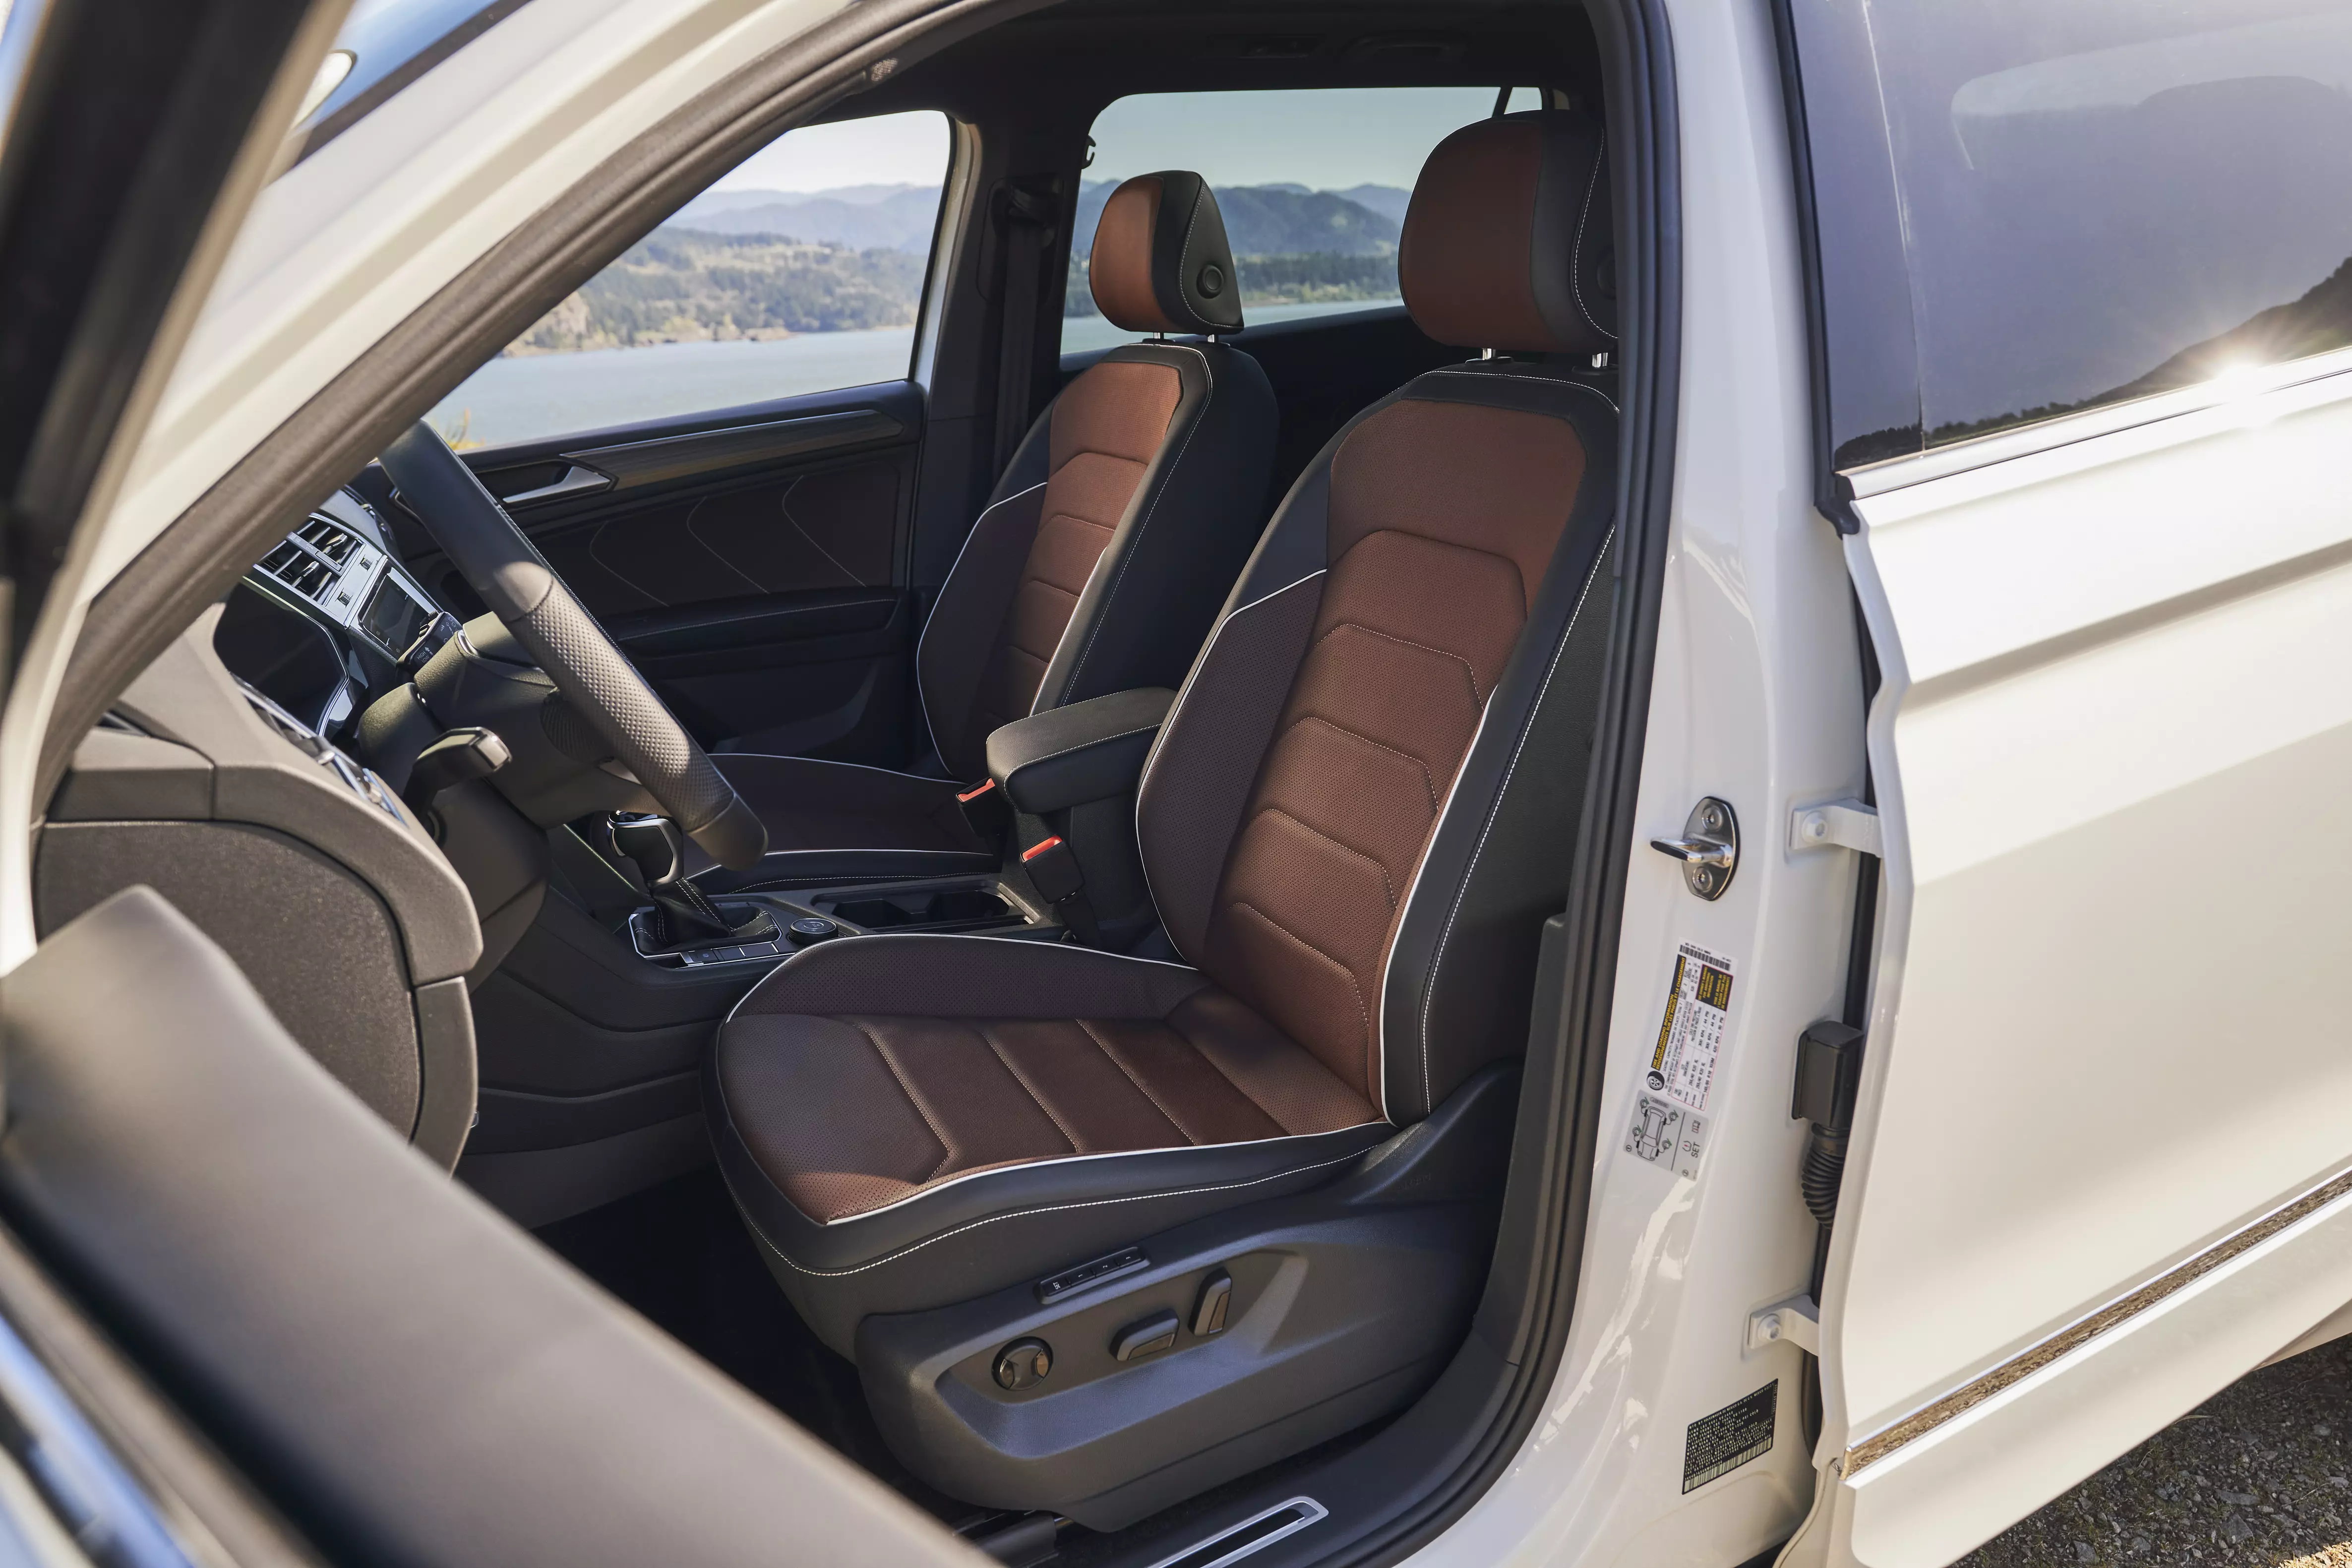 Volkswagen Tiguan SEL R-Line interior seats